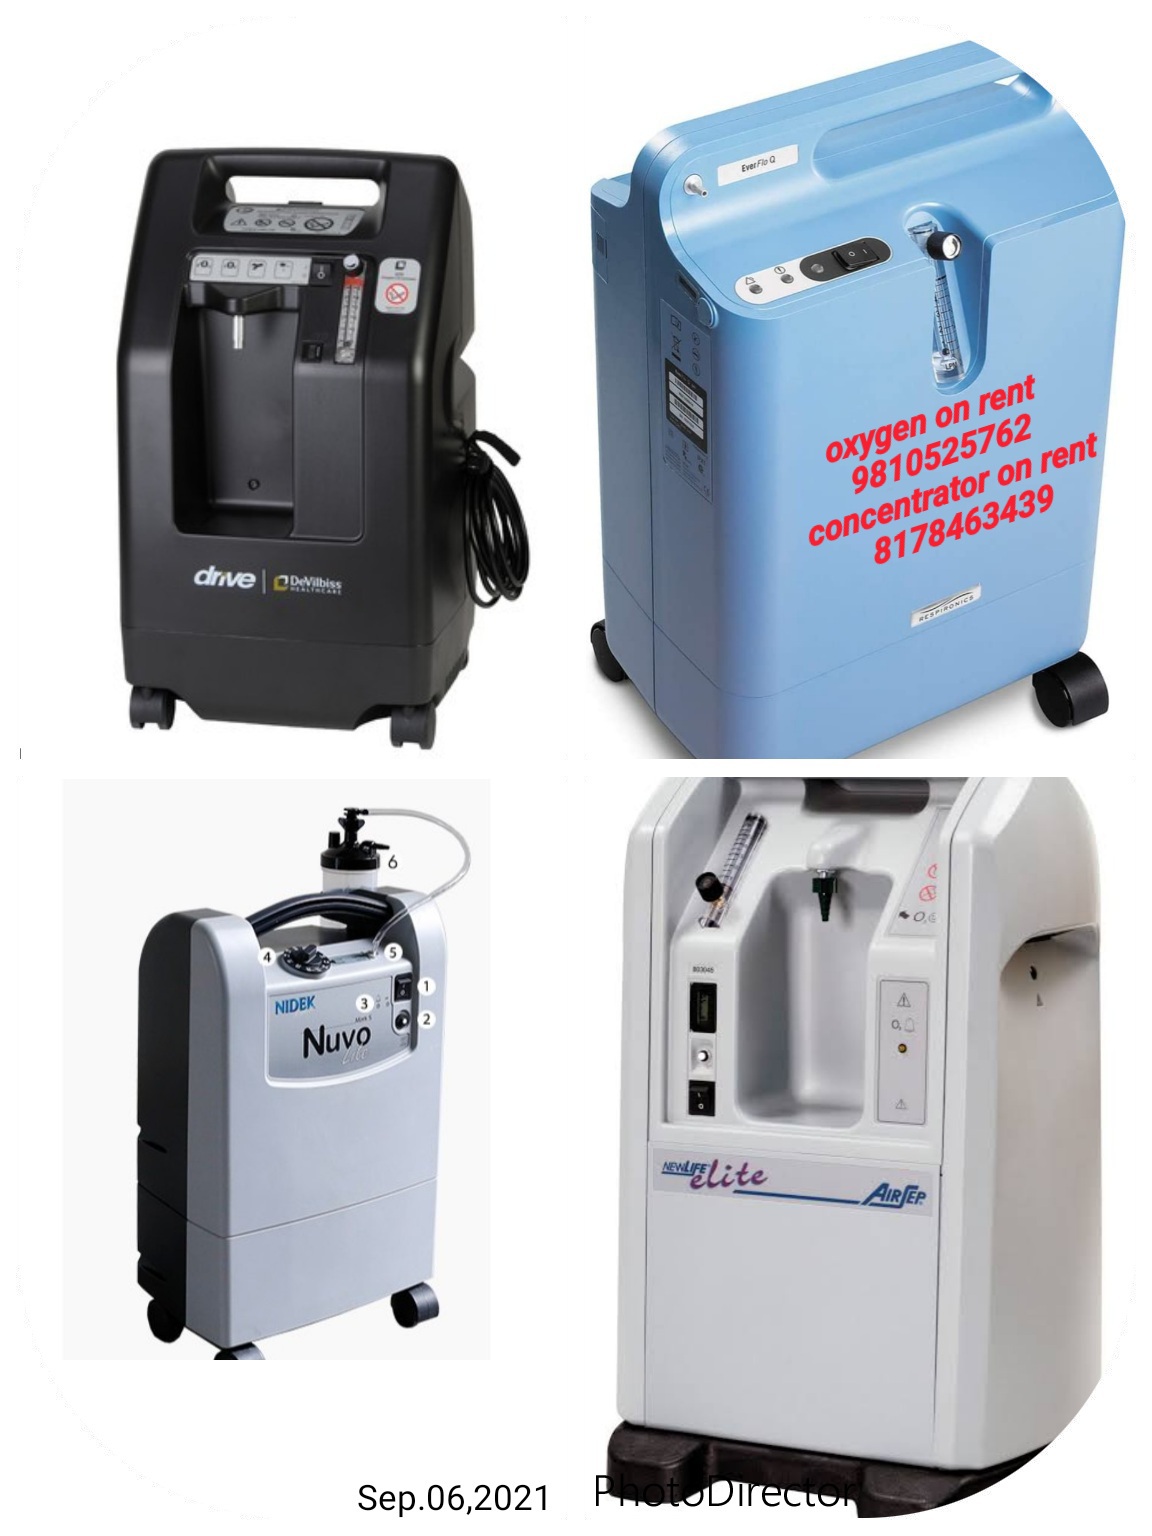 24x7 Oxygen Machine on rent in East delhi 9810525762